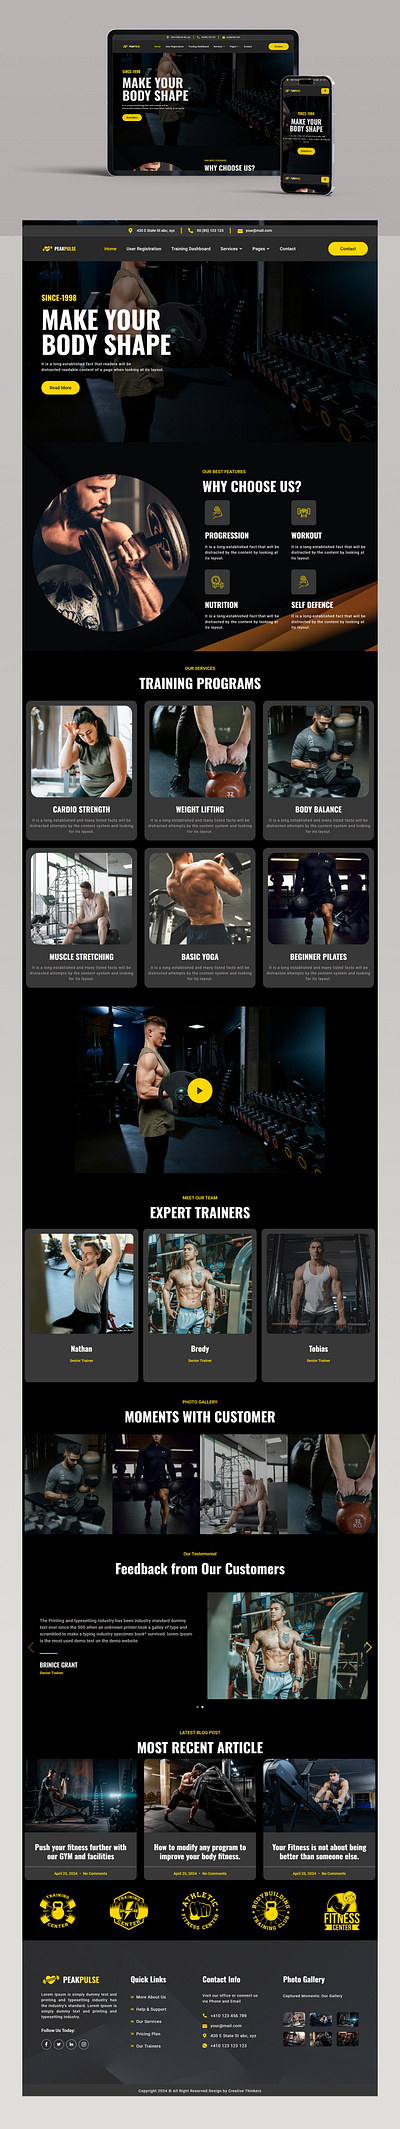 PeakPulse Gym & Fitness Website fitness website gym website modern web design web design web development website design